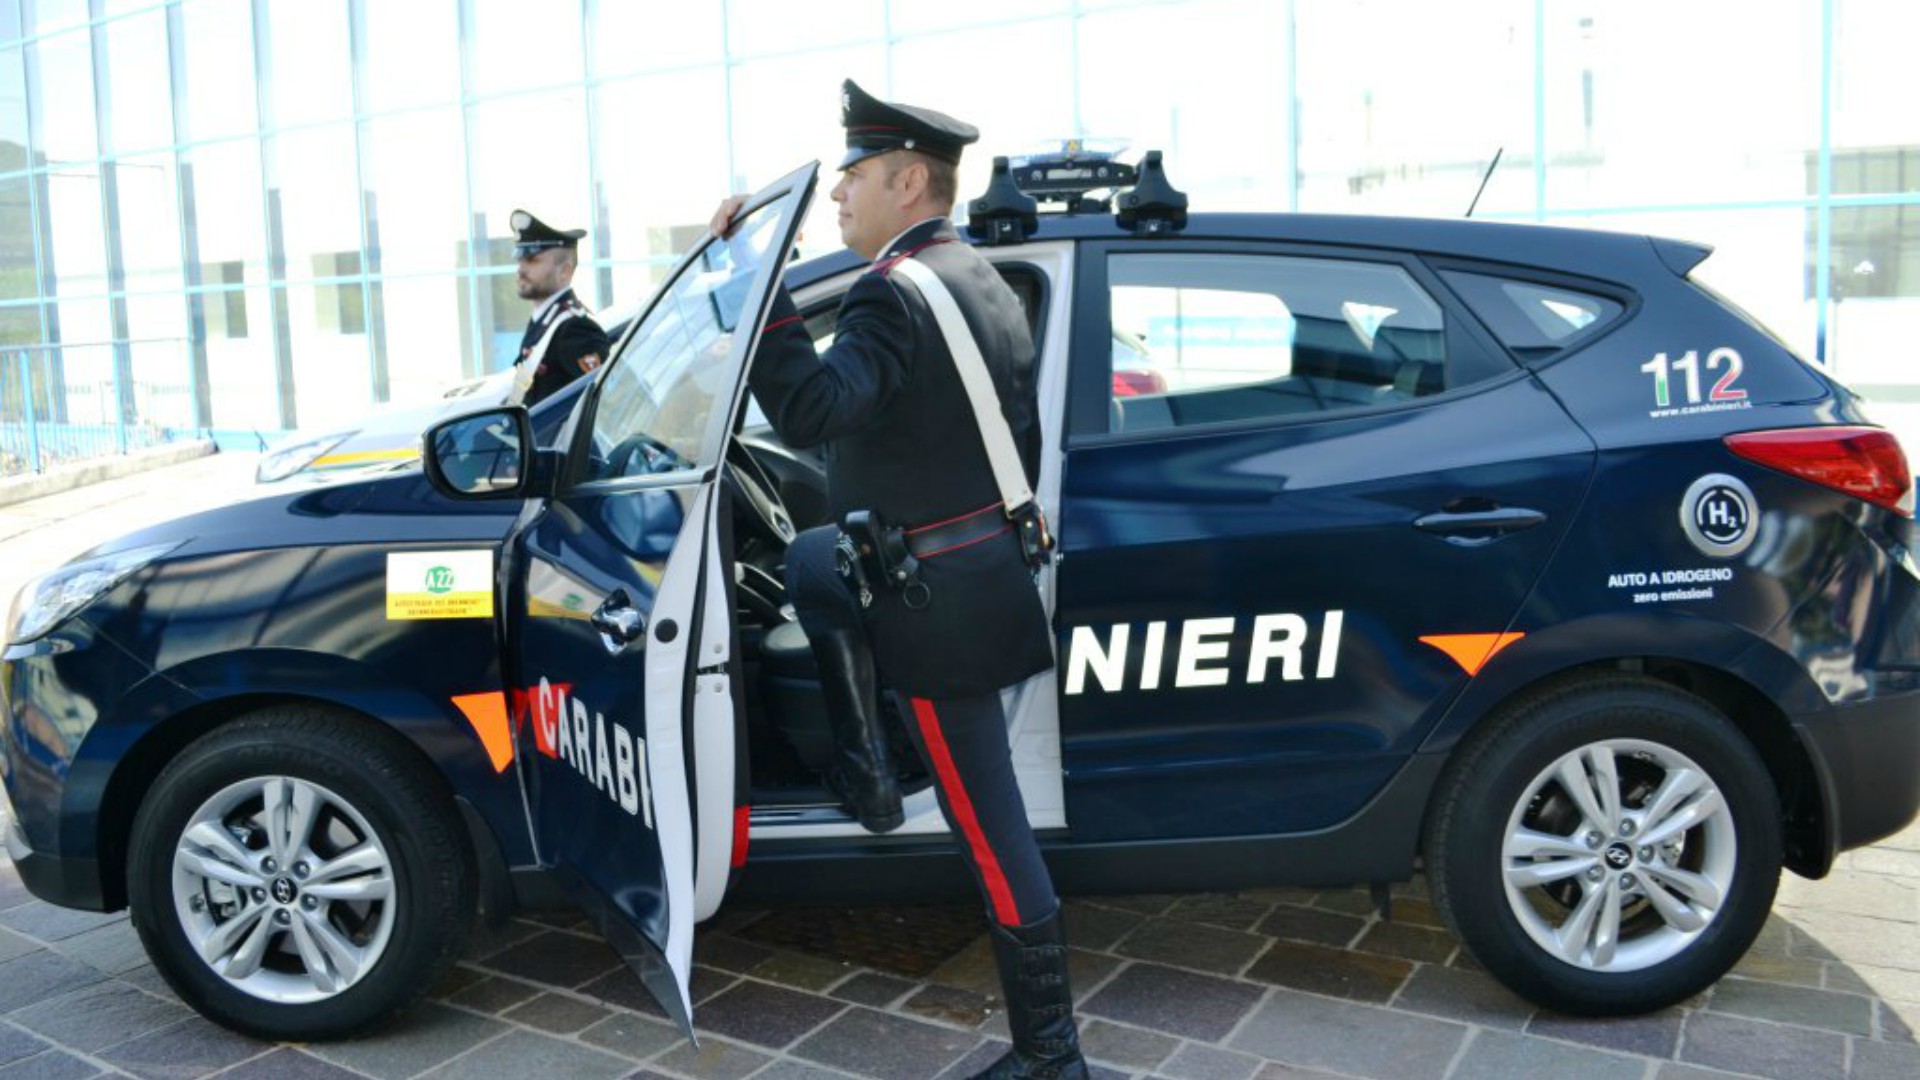 Detenidas 27 personas en Italia por tener vínculos con la mafia ‘Ndrangheta